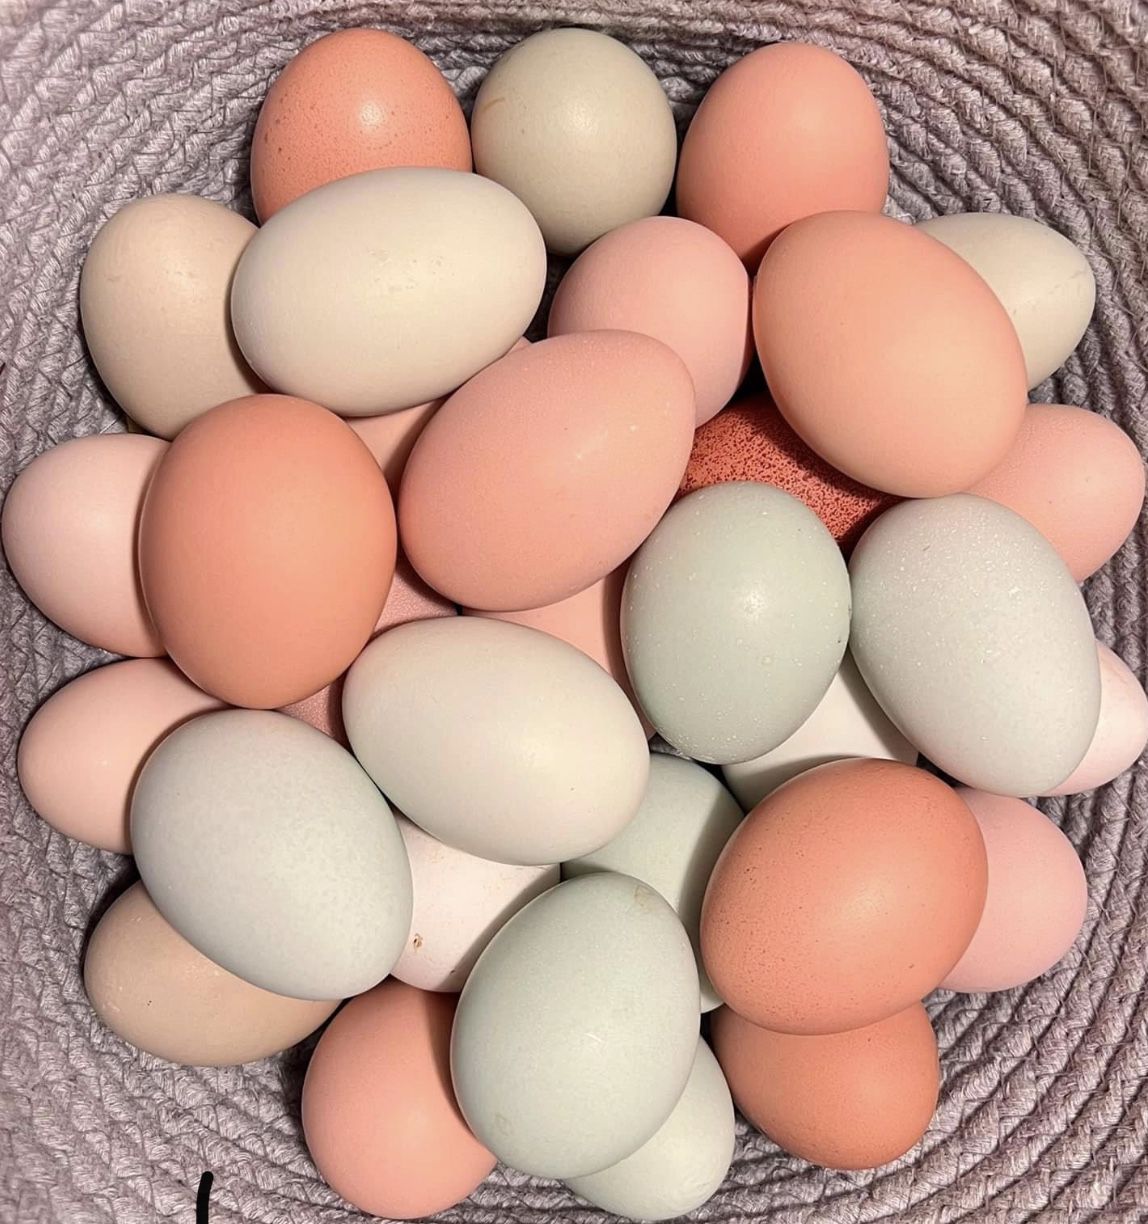 Fresh Eggs For Sale